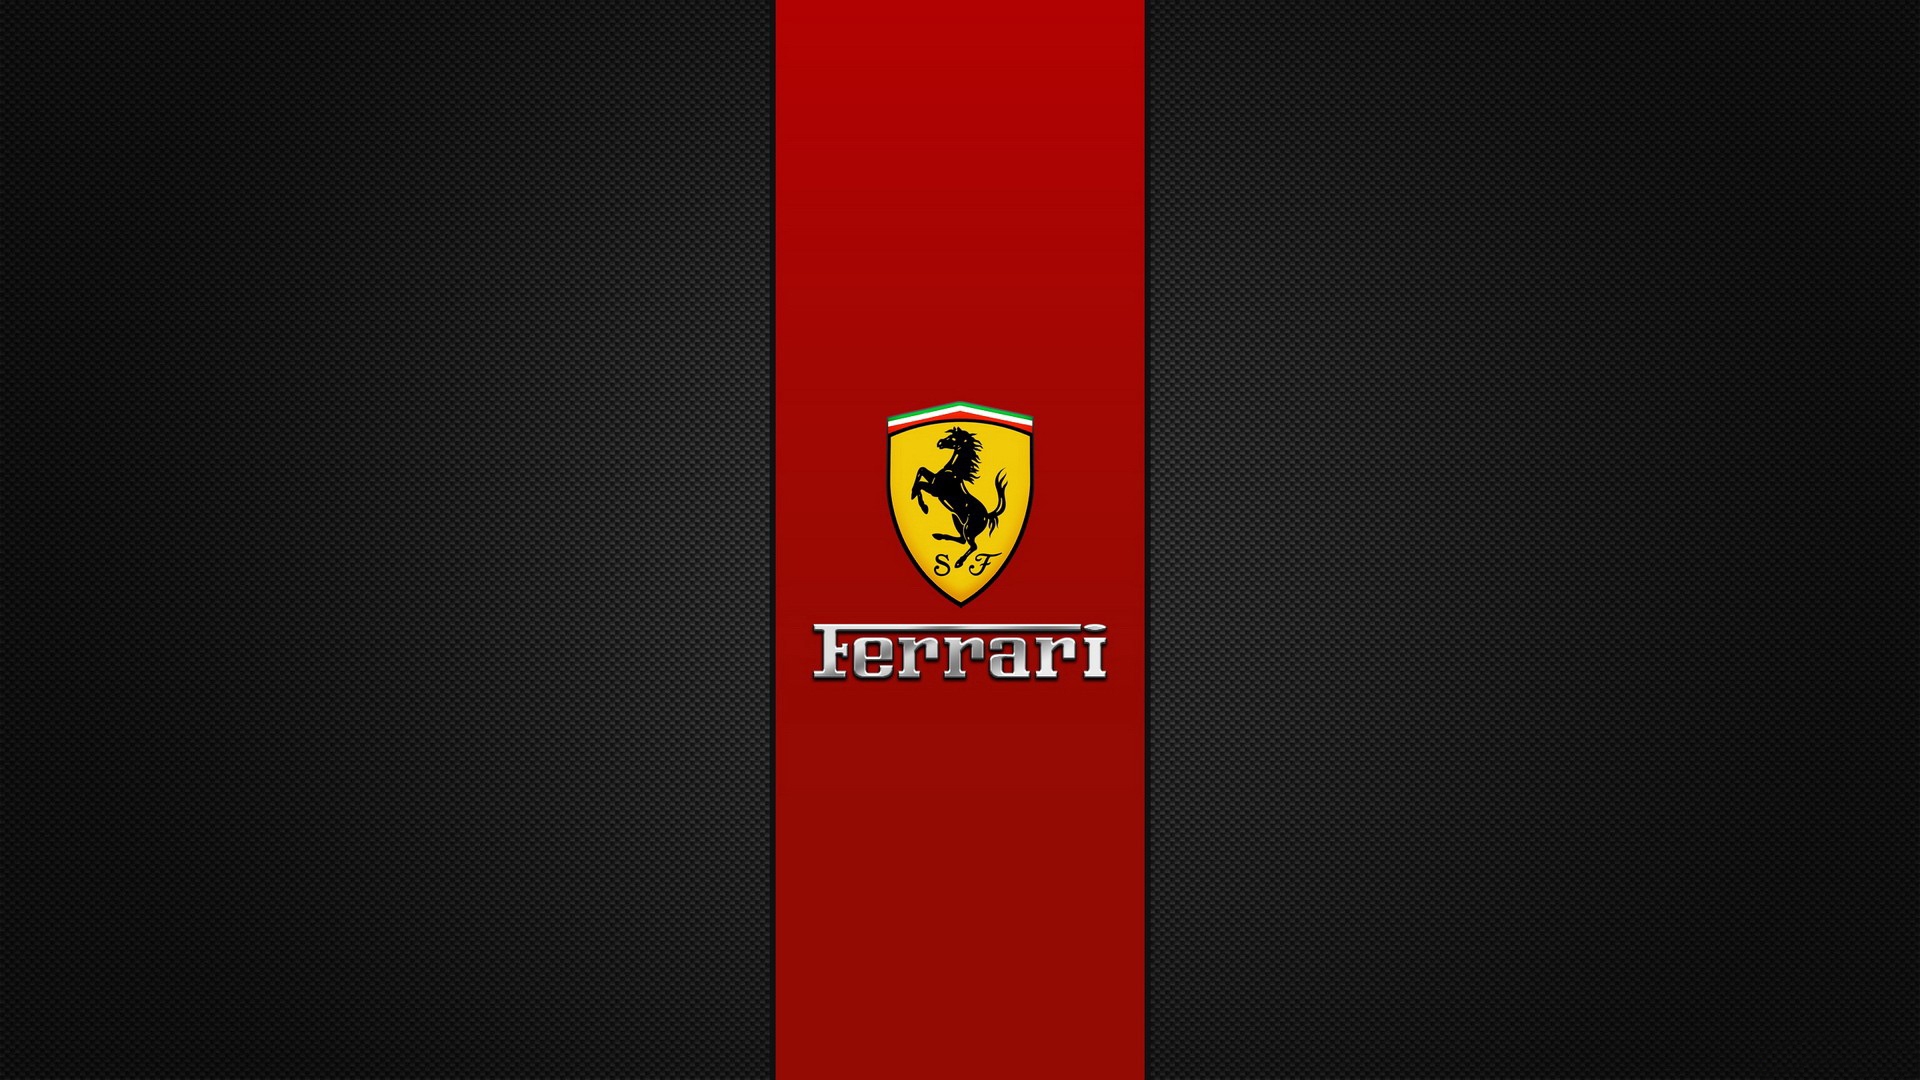 66+ Ferrari Logo Wallpaper 1920x1080